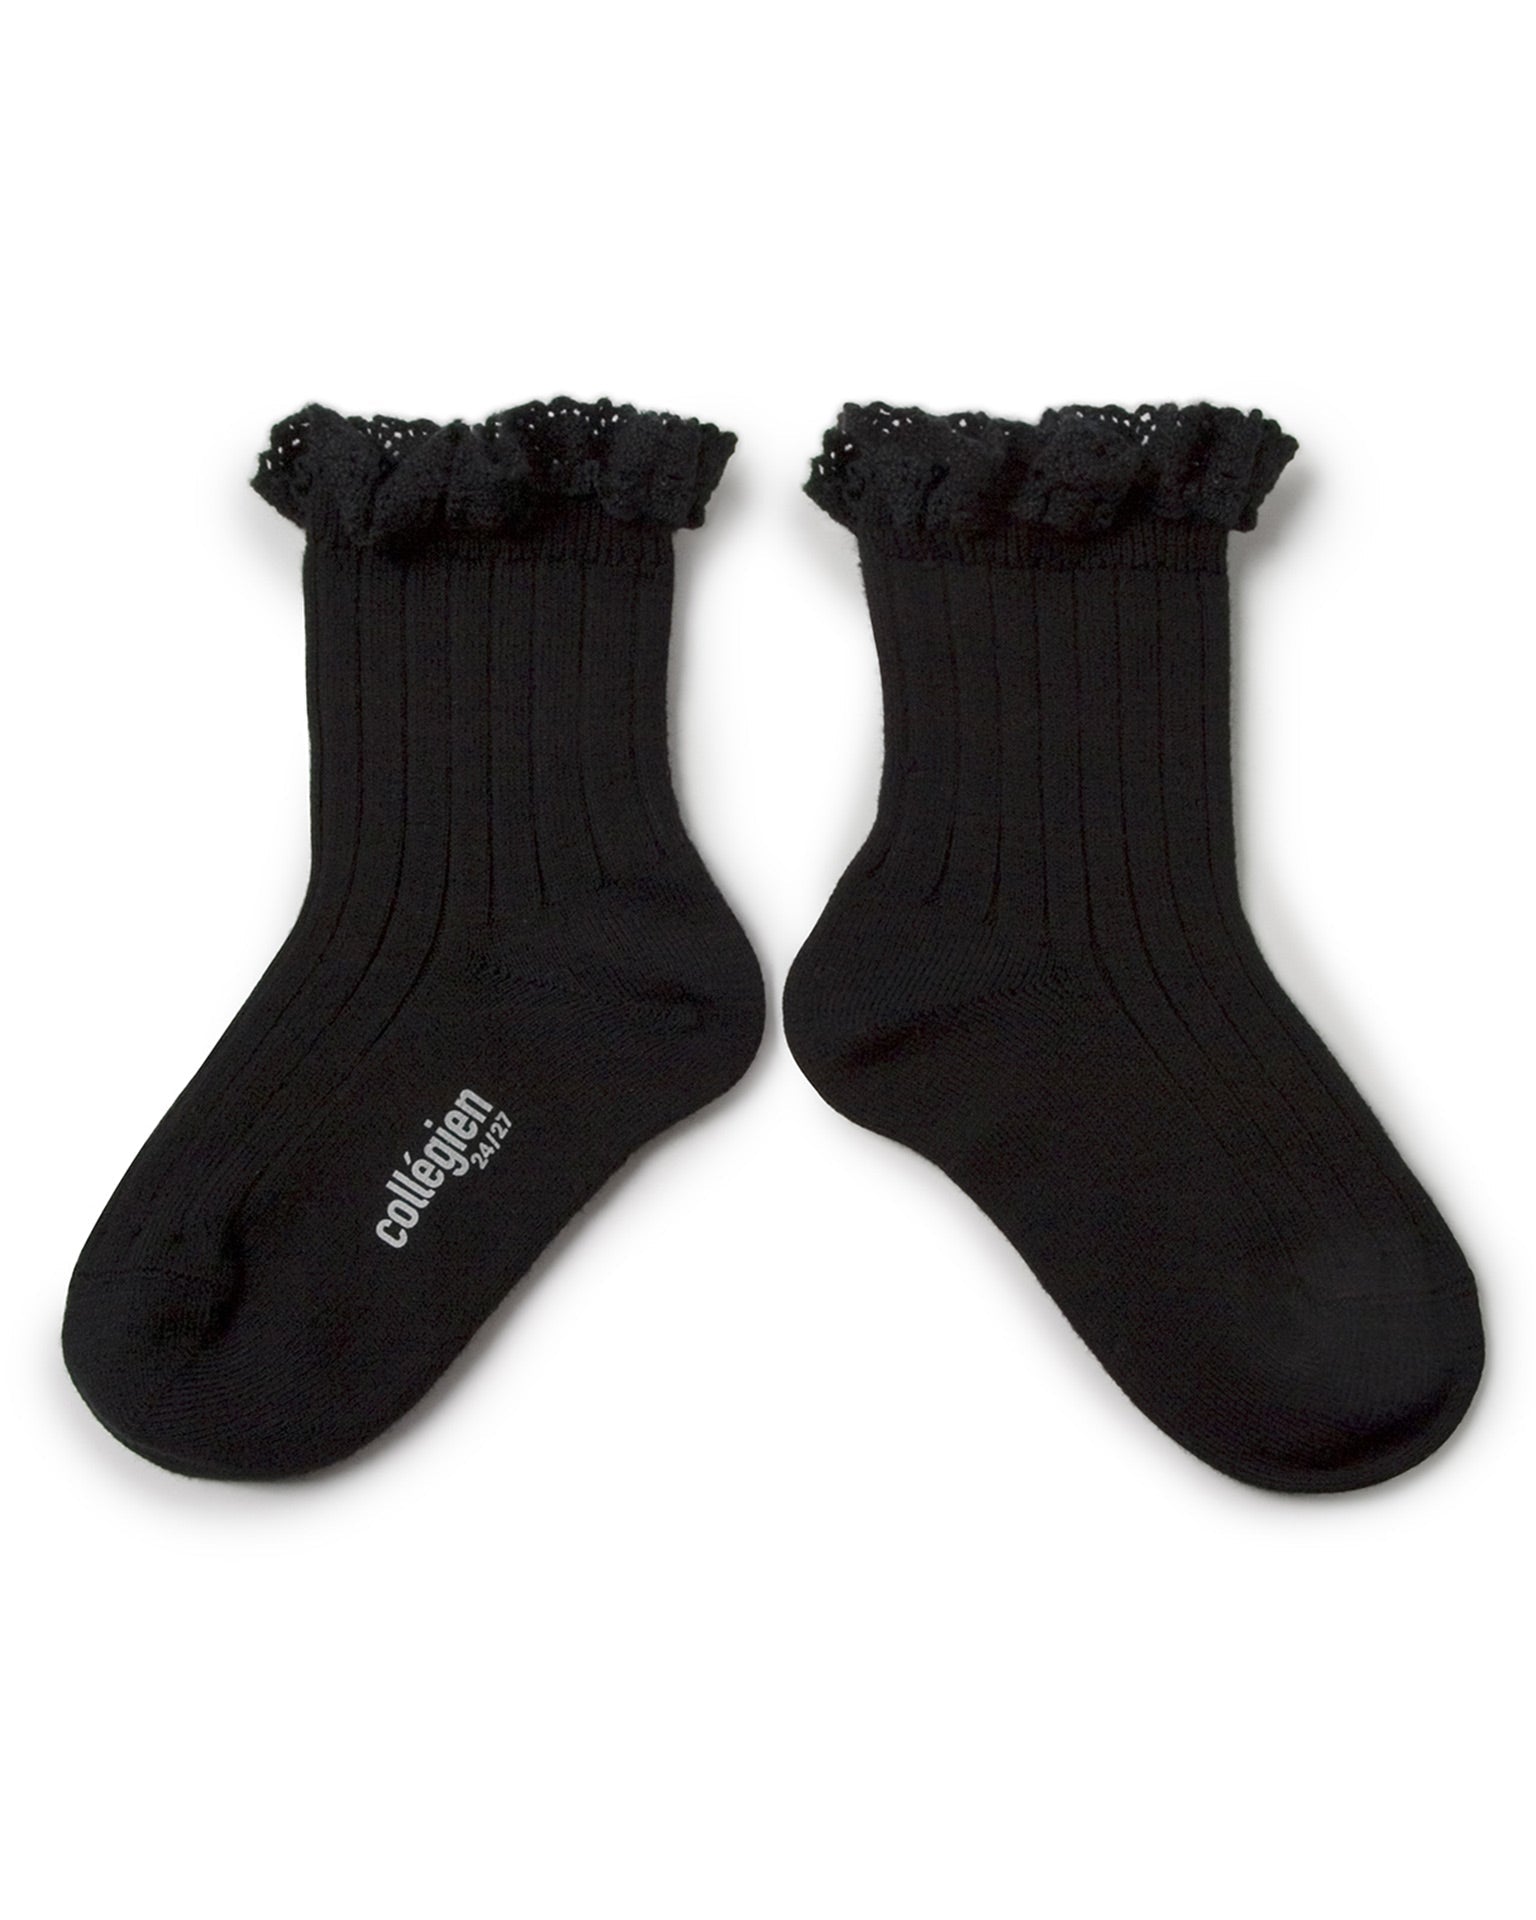 Little collegien accessories lili ankle socks in noir de charbon